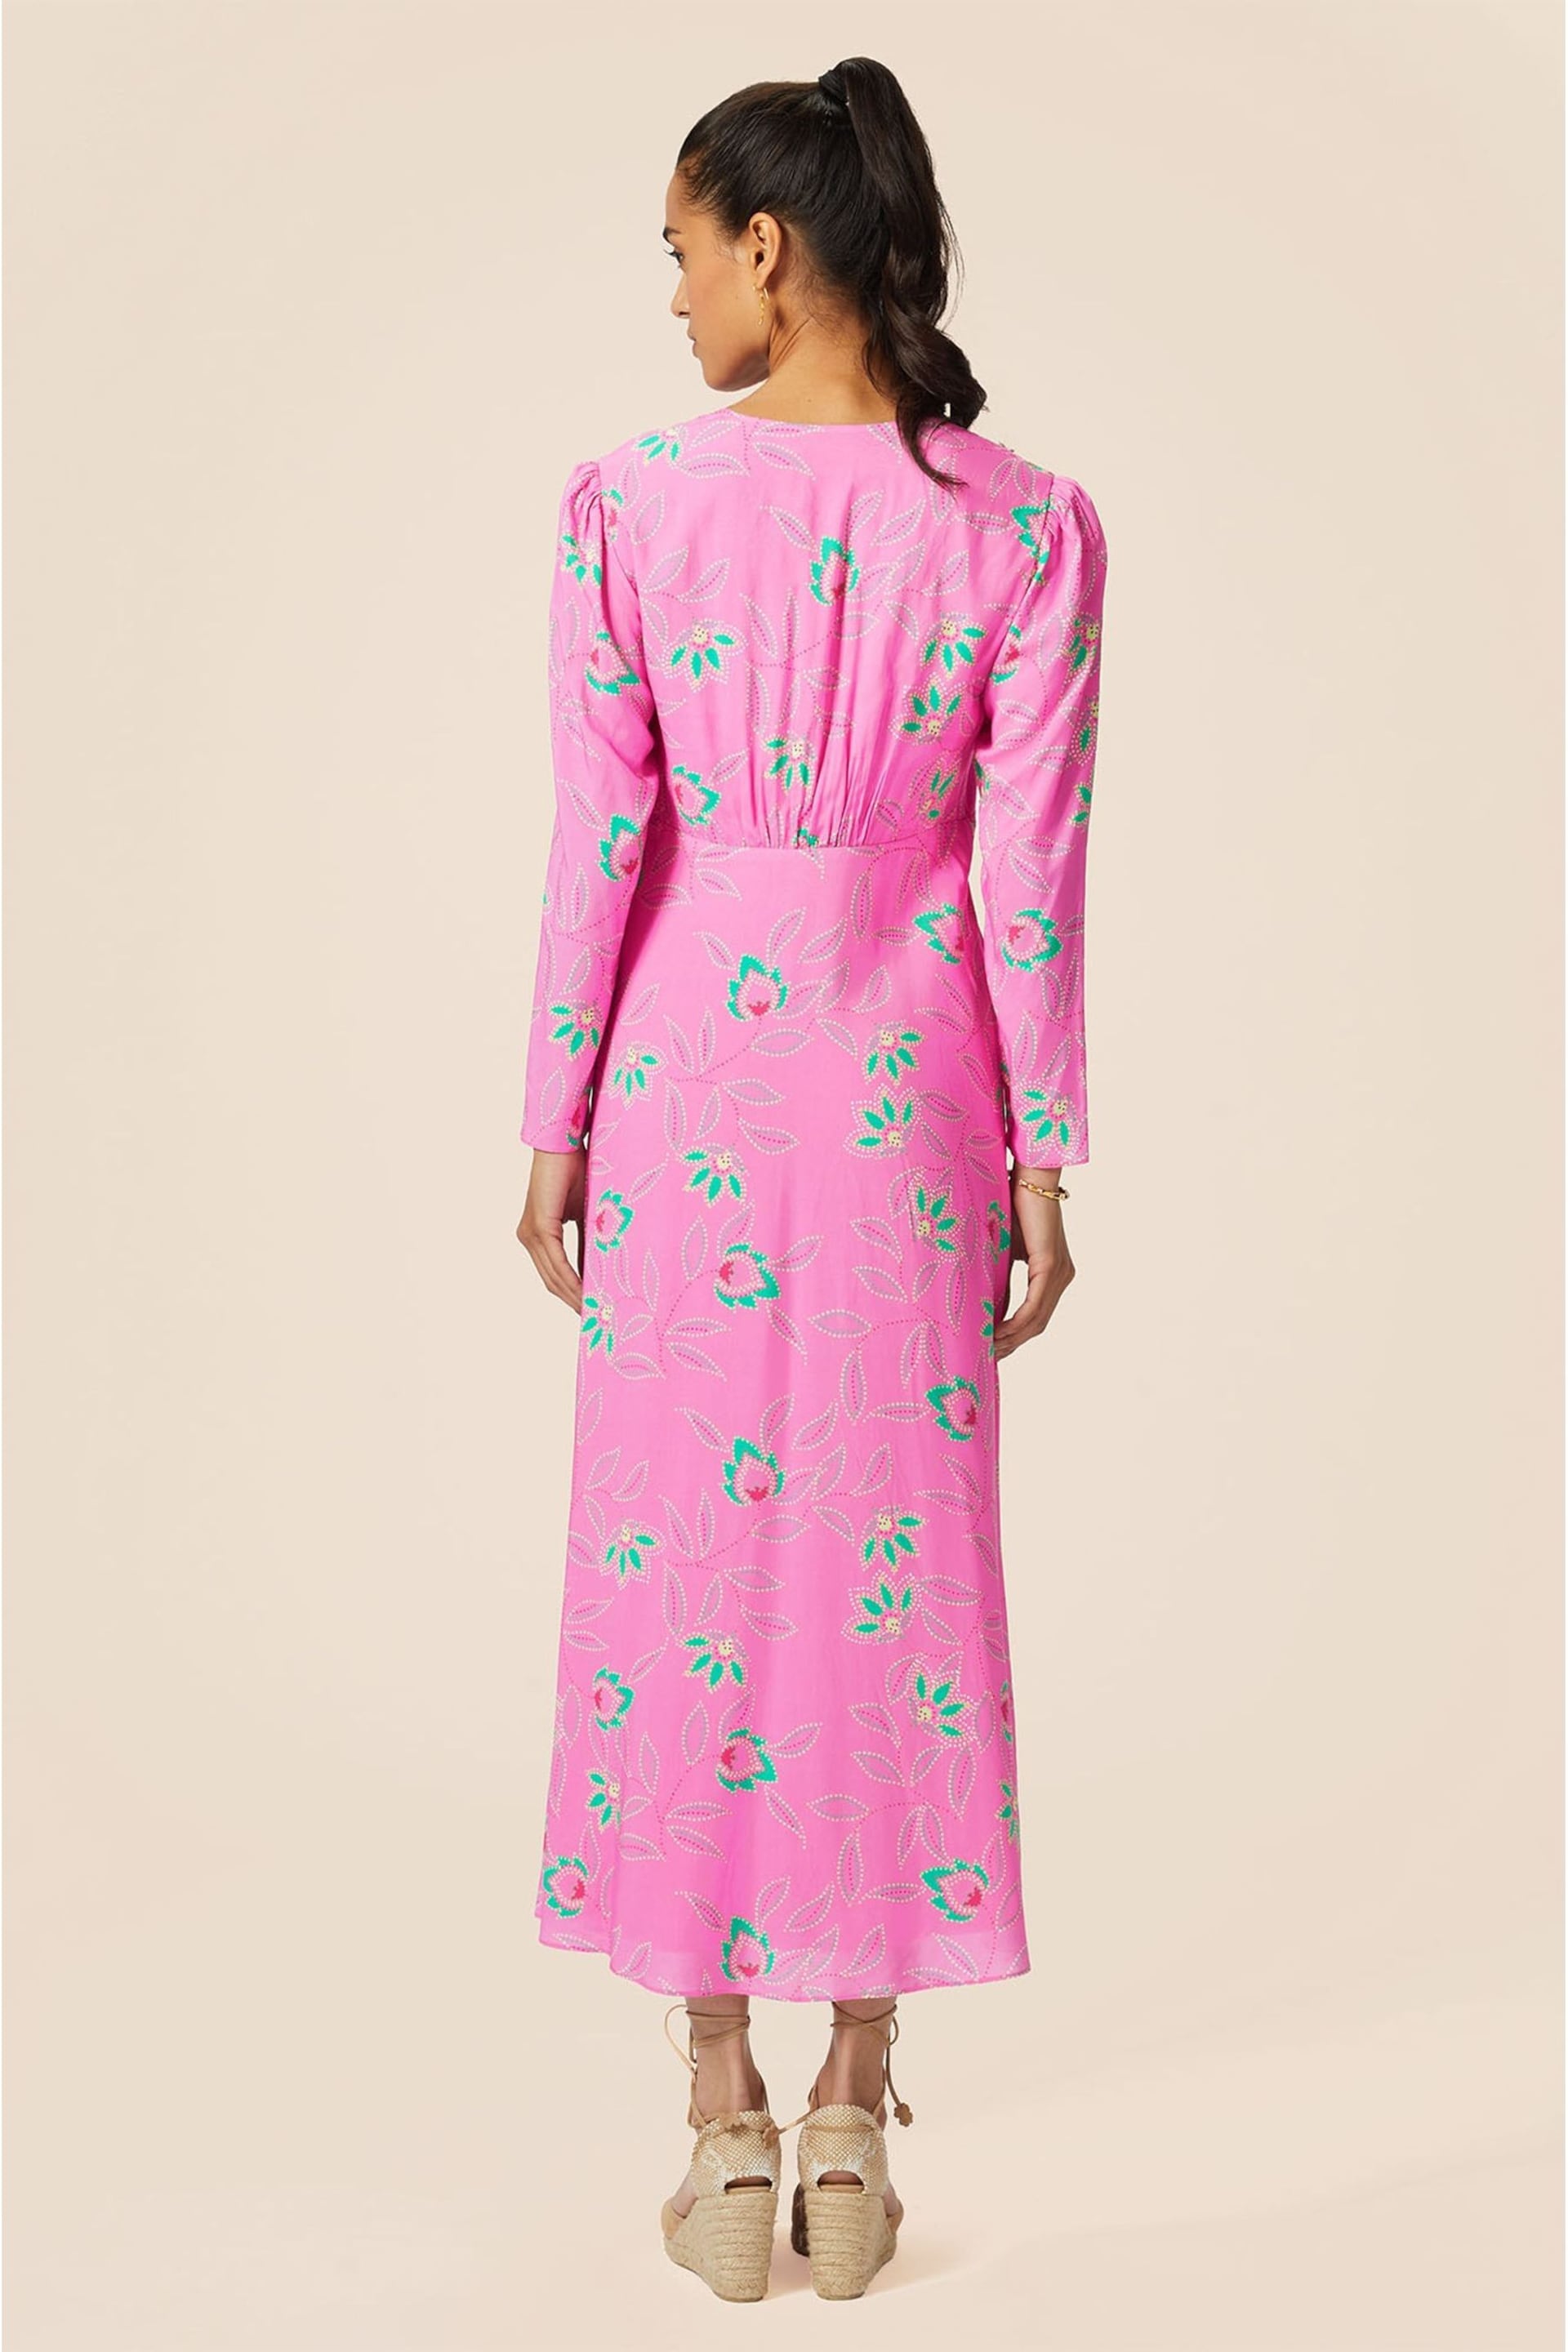 Aspiga Pink Claudia Dress - Image 2 of 8